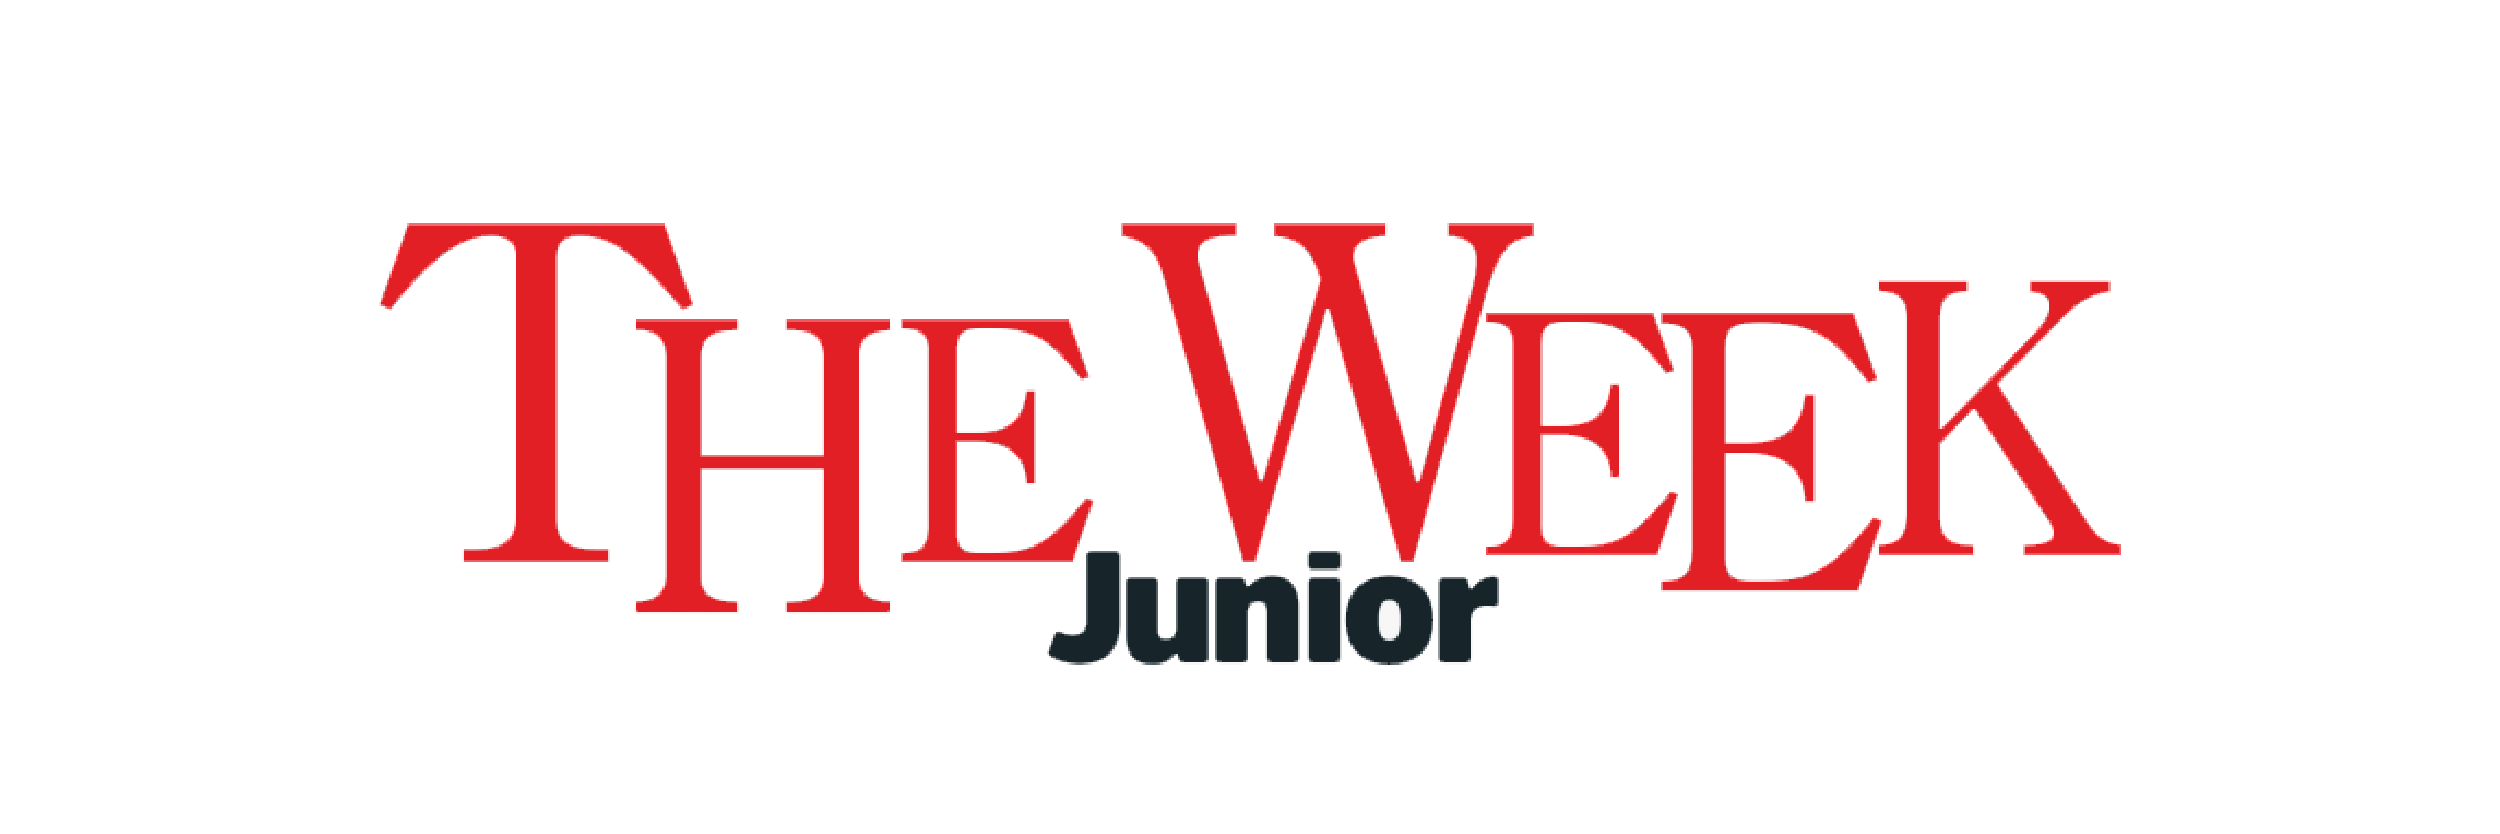 The Week Junior logo